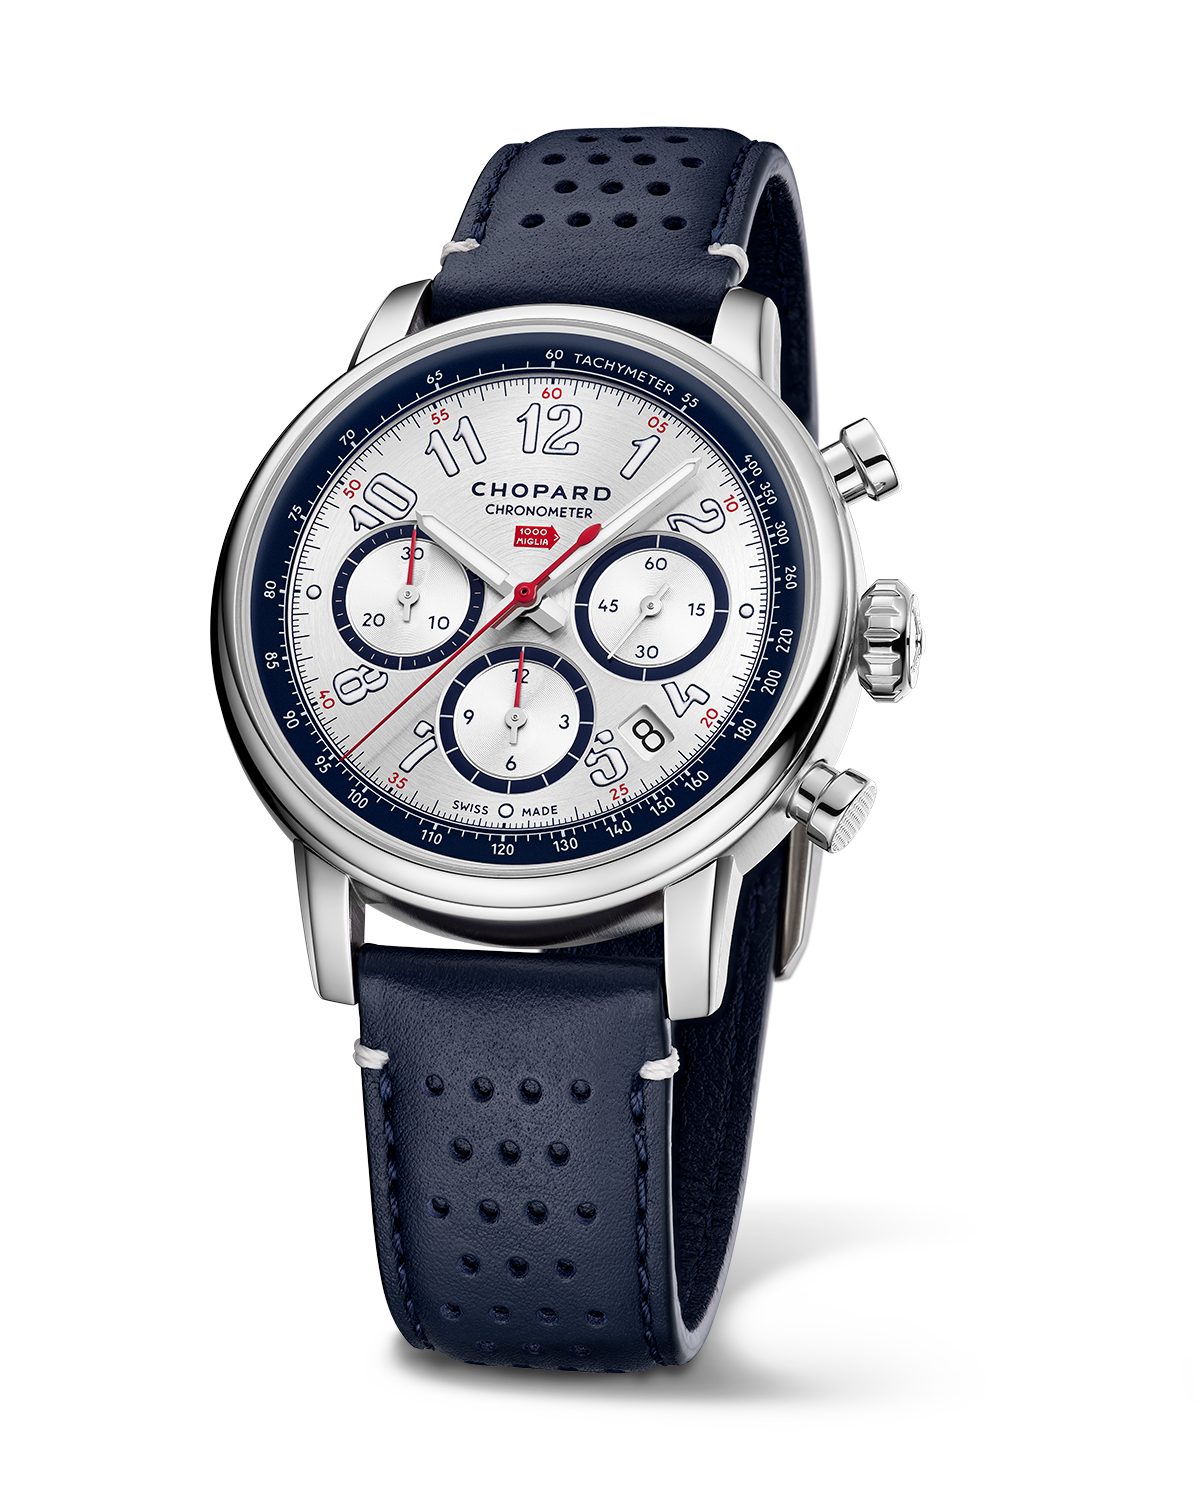 Cortina-Watch-Chopard-Mille-Miglia-Classic-Chonograph-French-profil.